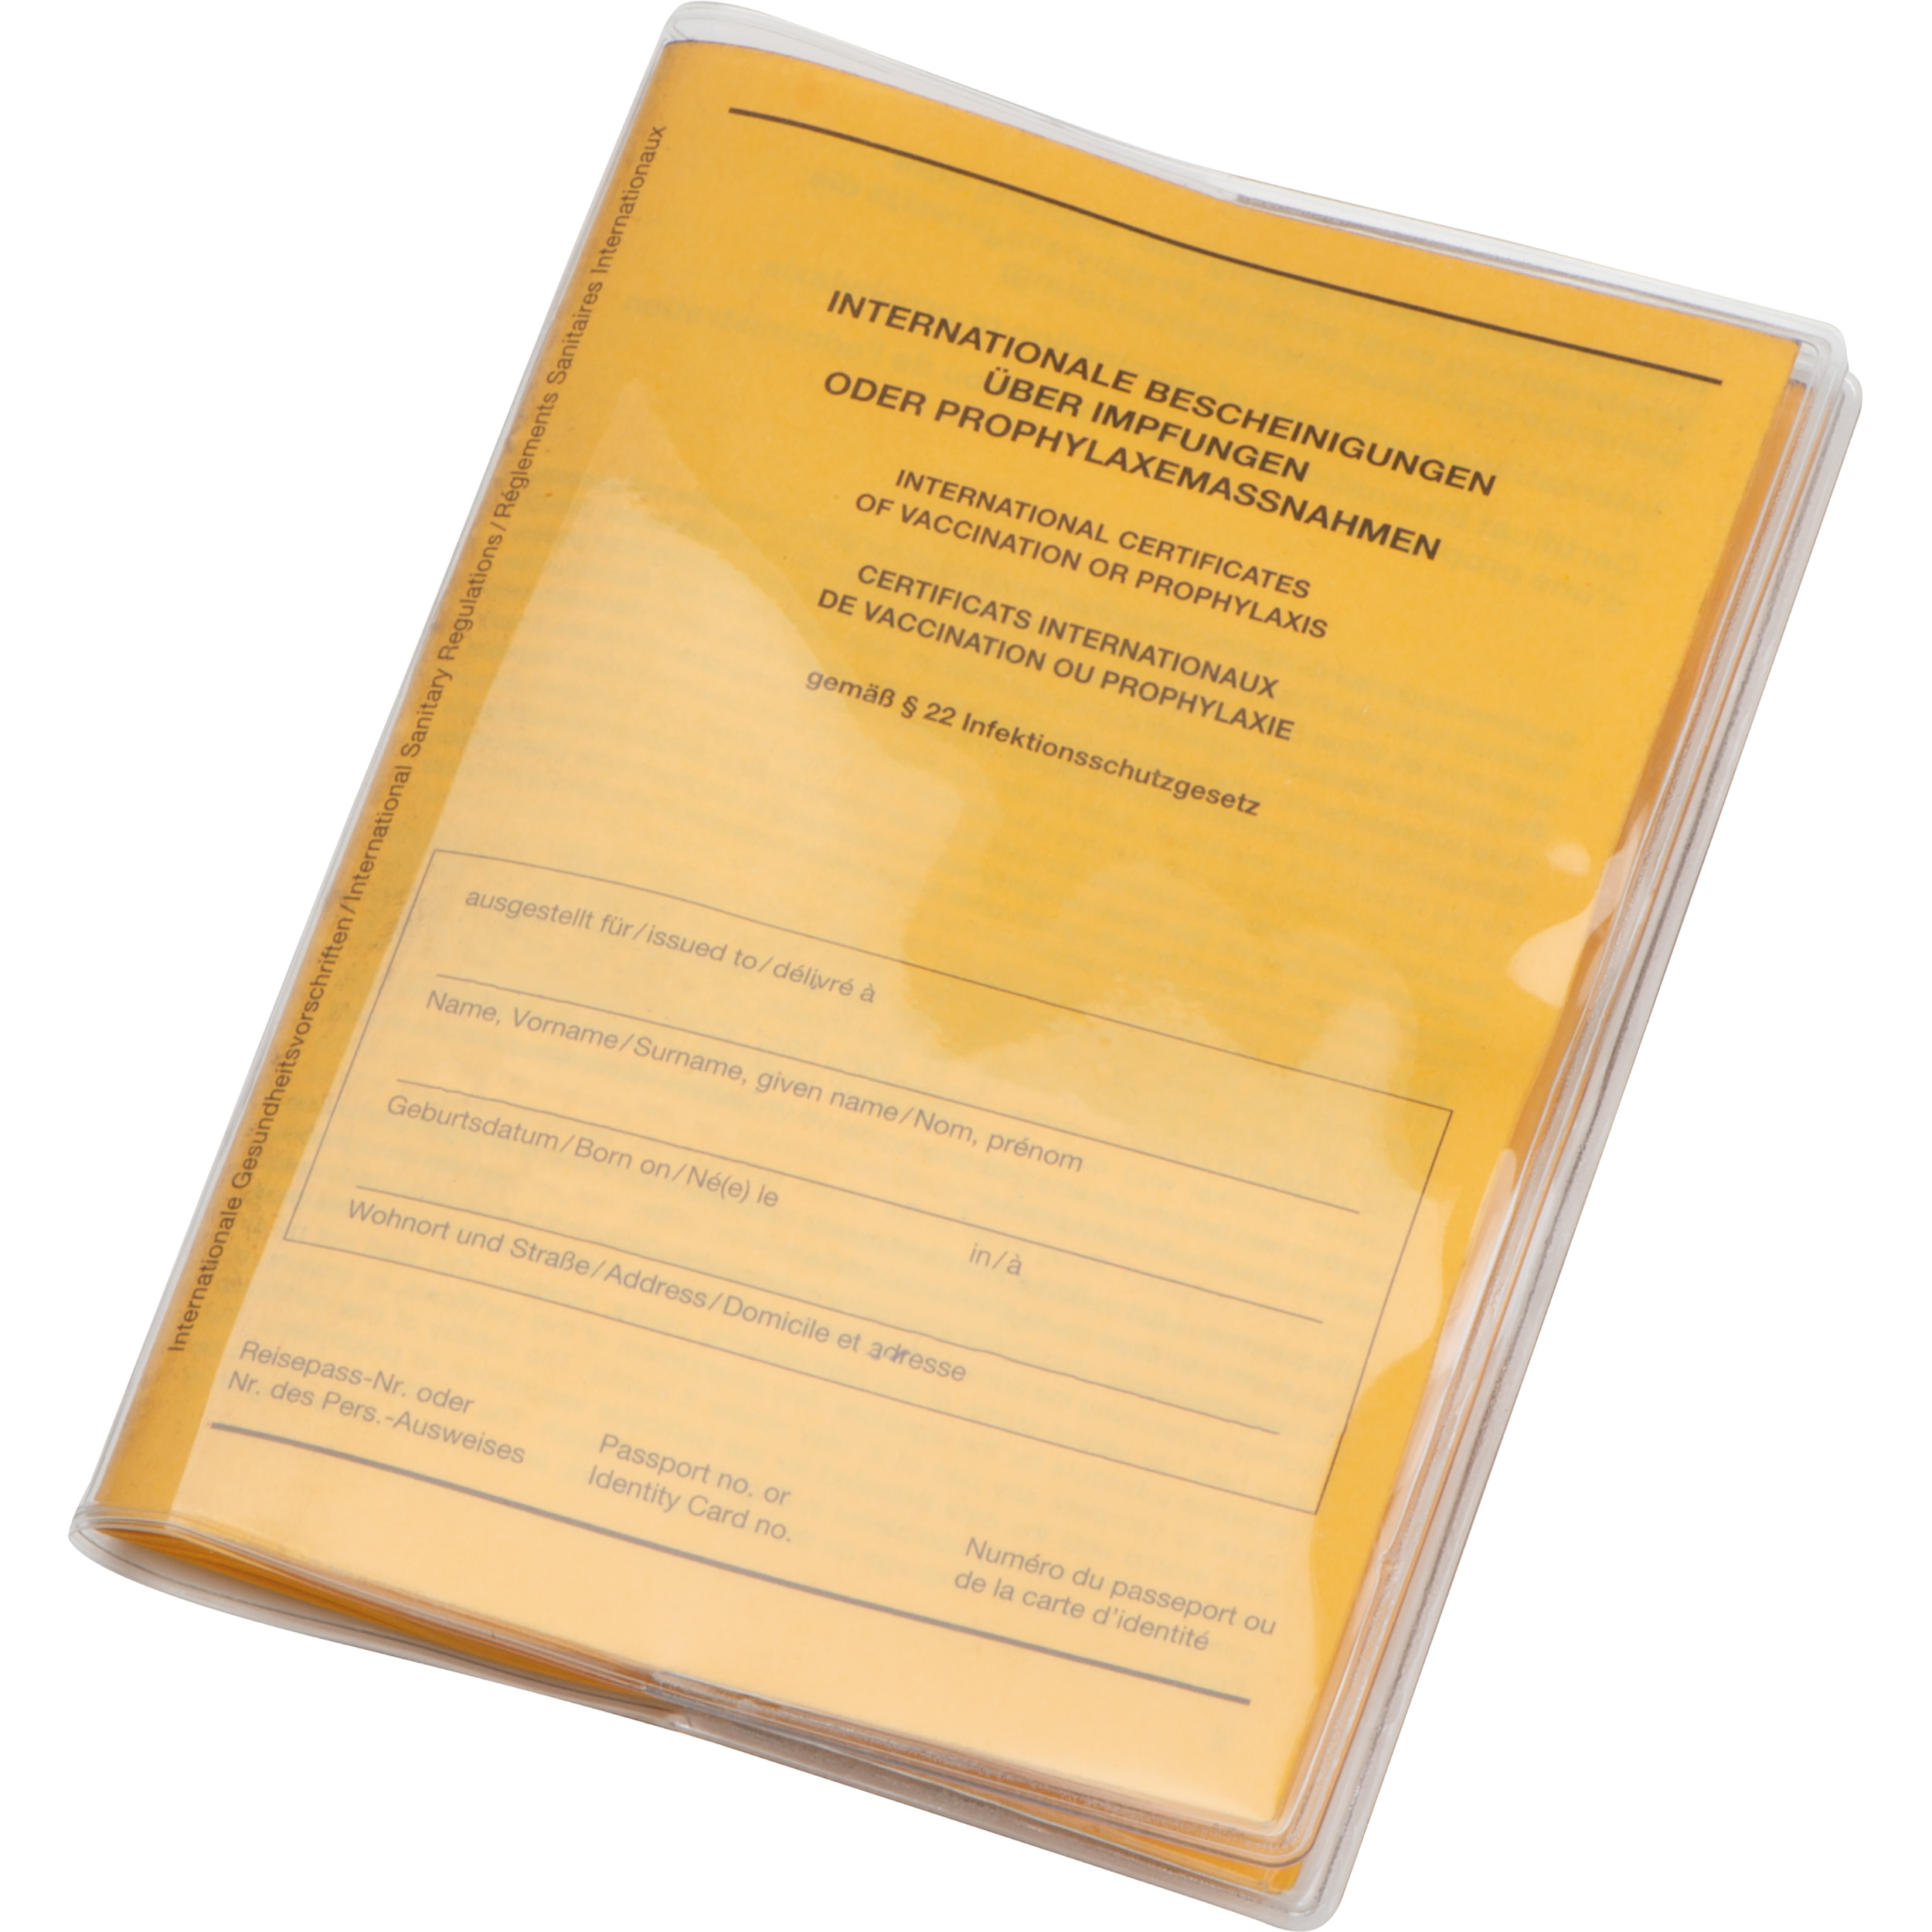 PVC document cover